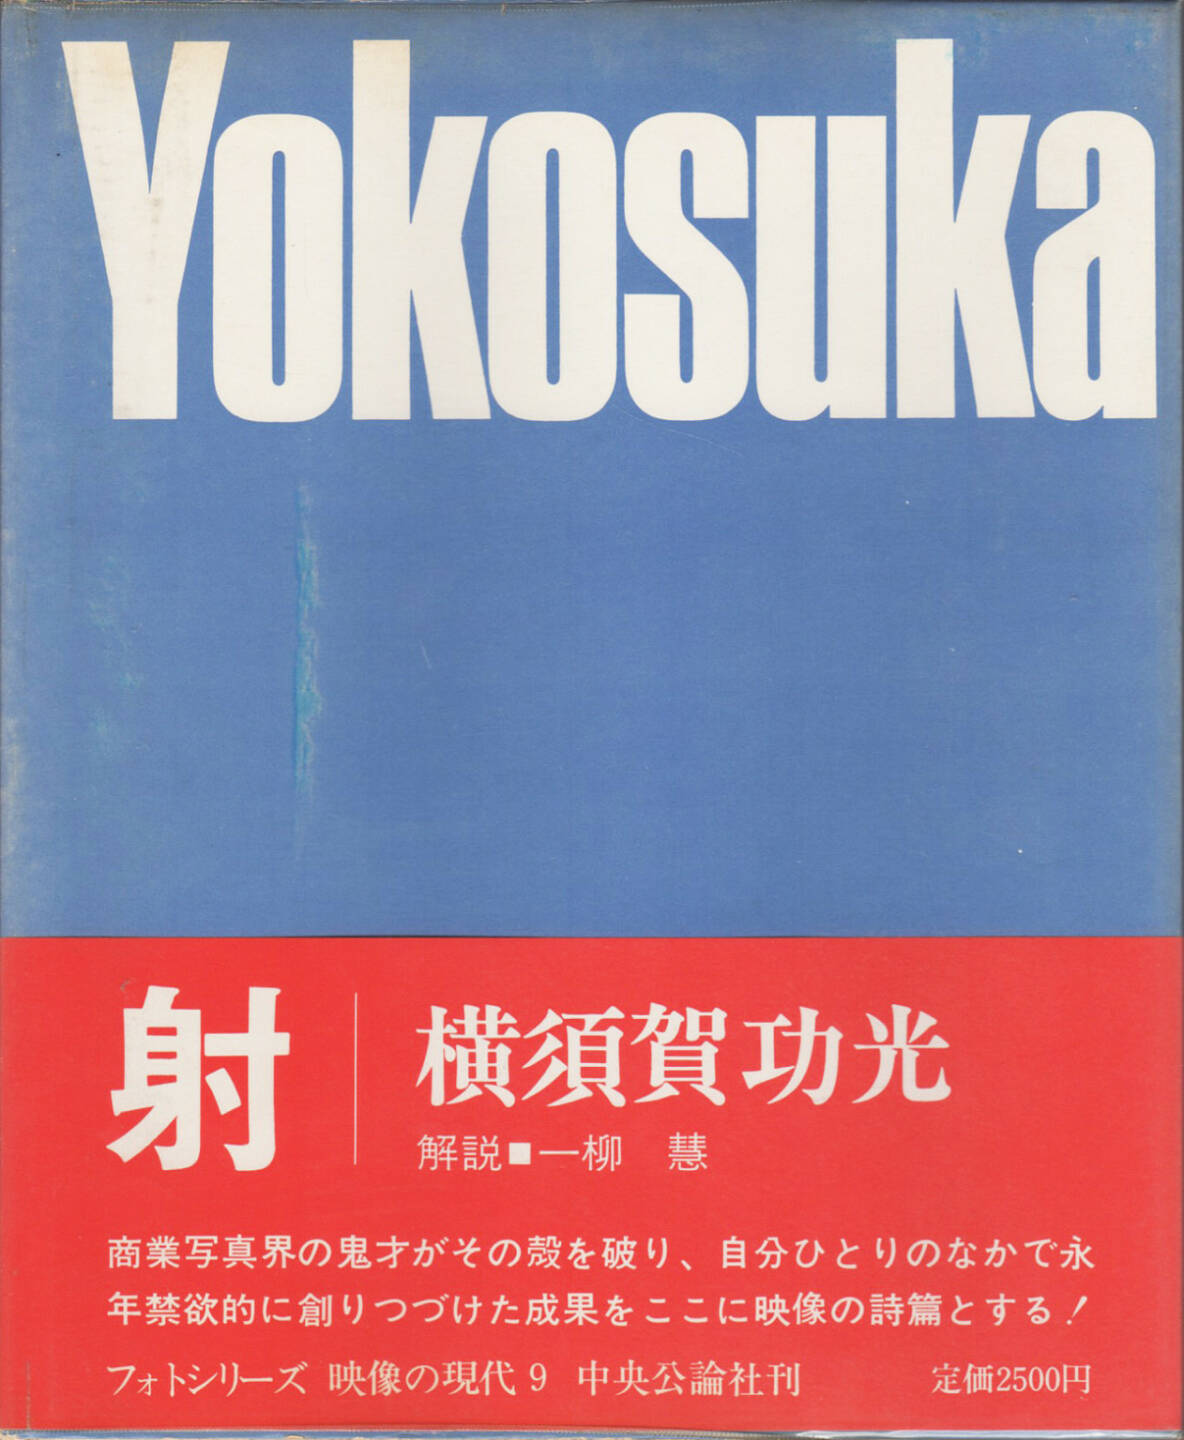 Noriaki Yokosuka - Shafts (横須賀功光 | 射 映像の現代9), Chuo-koron-sha 1972, Cover - http://josefchladek.com/book/noriaki_yokosuka_-_shafts_横須賀功光_射_映像の現代9